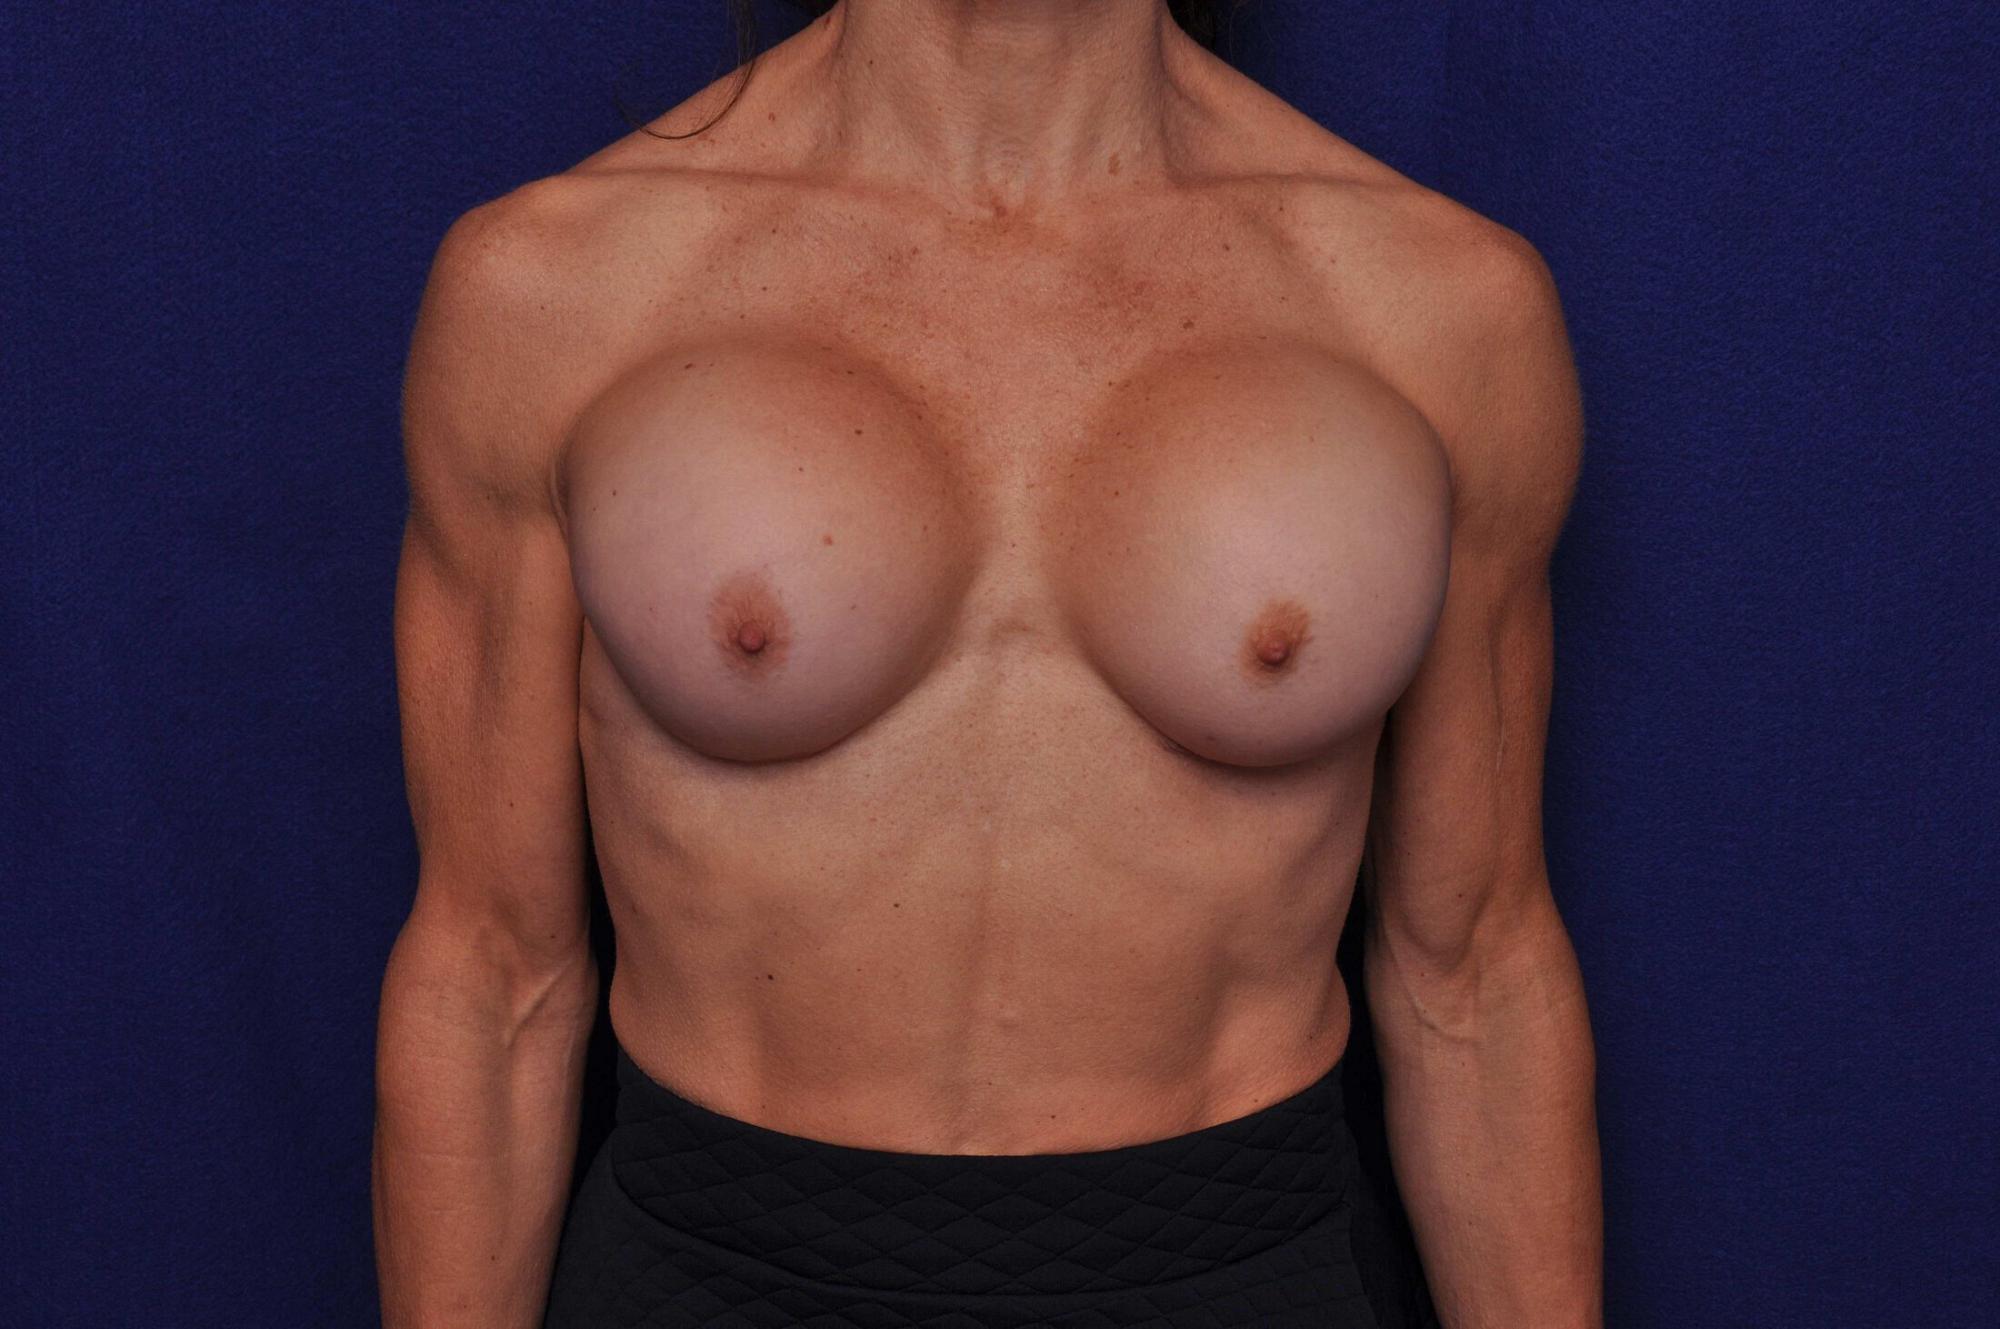 After photo of Vero Beach patient's torso